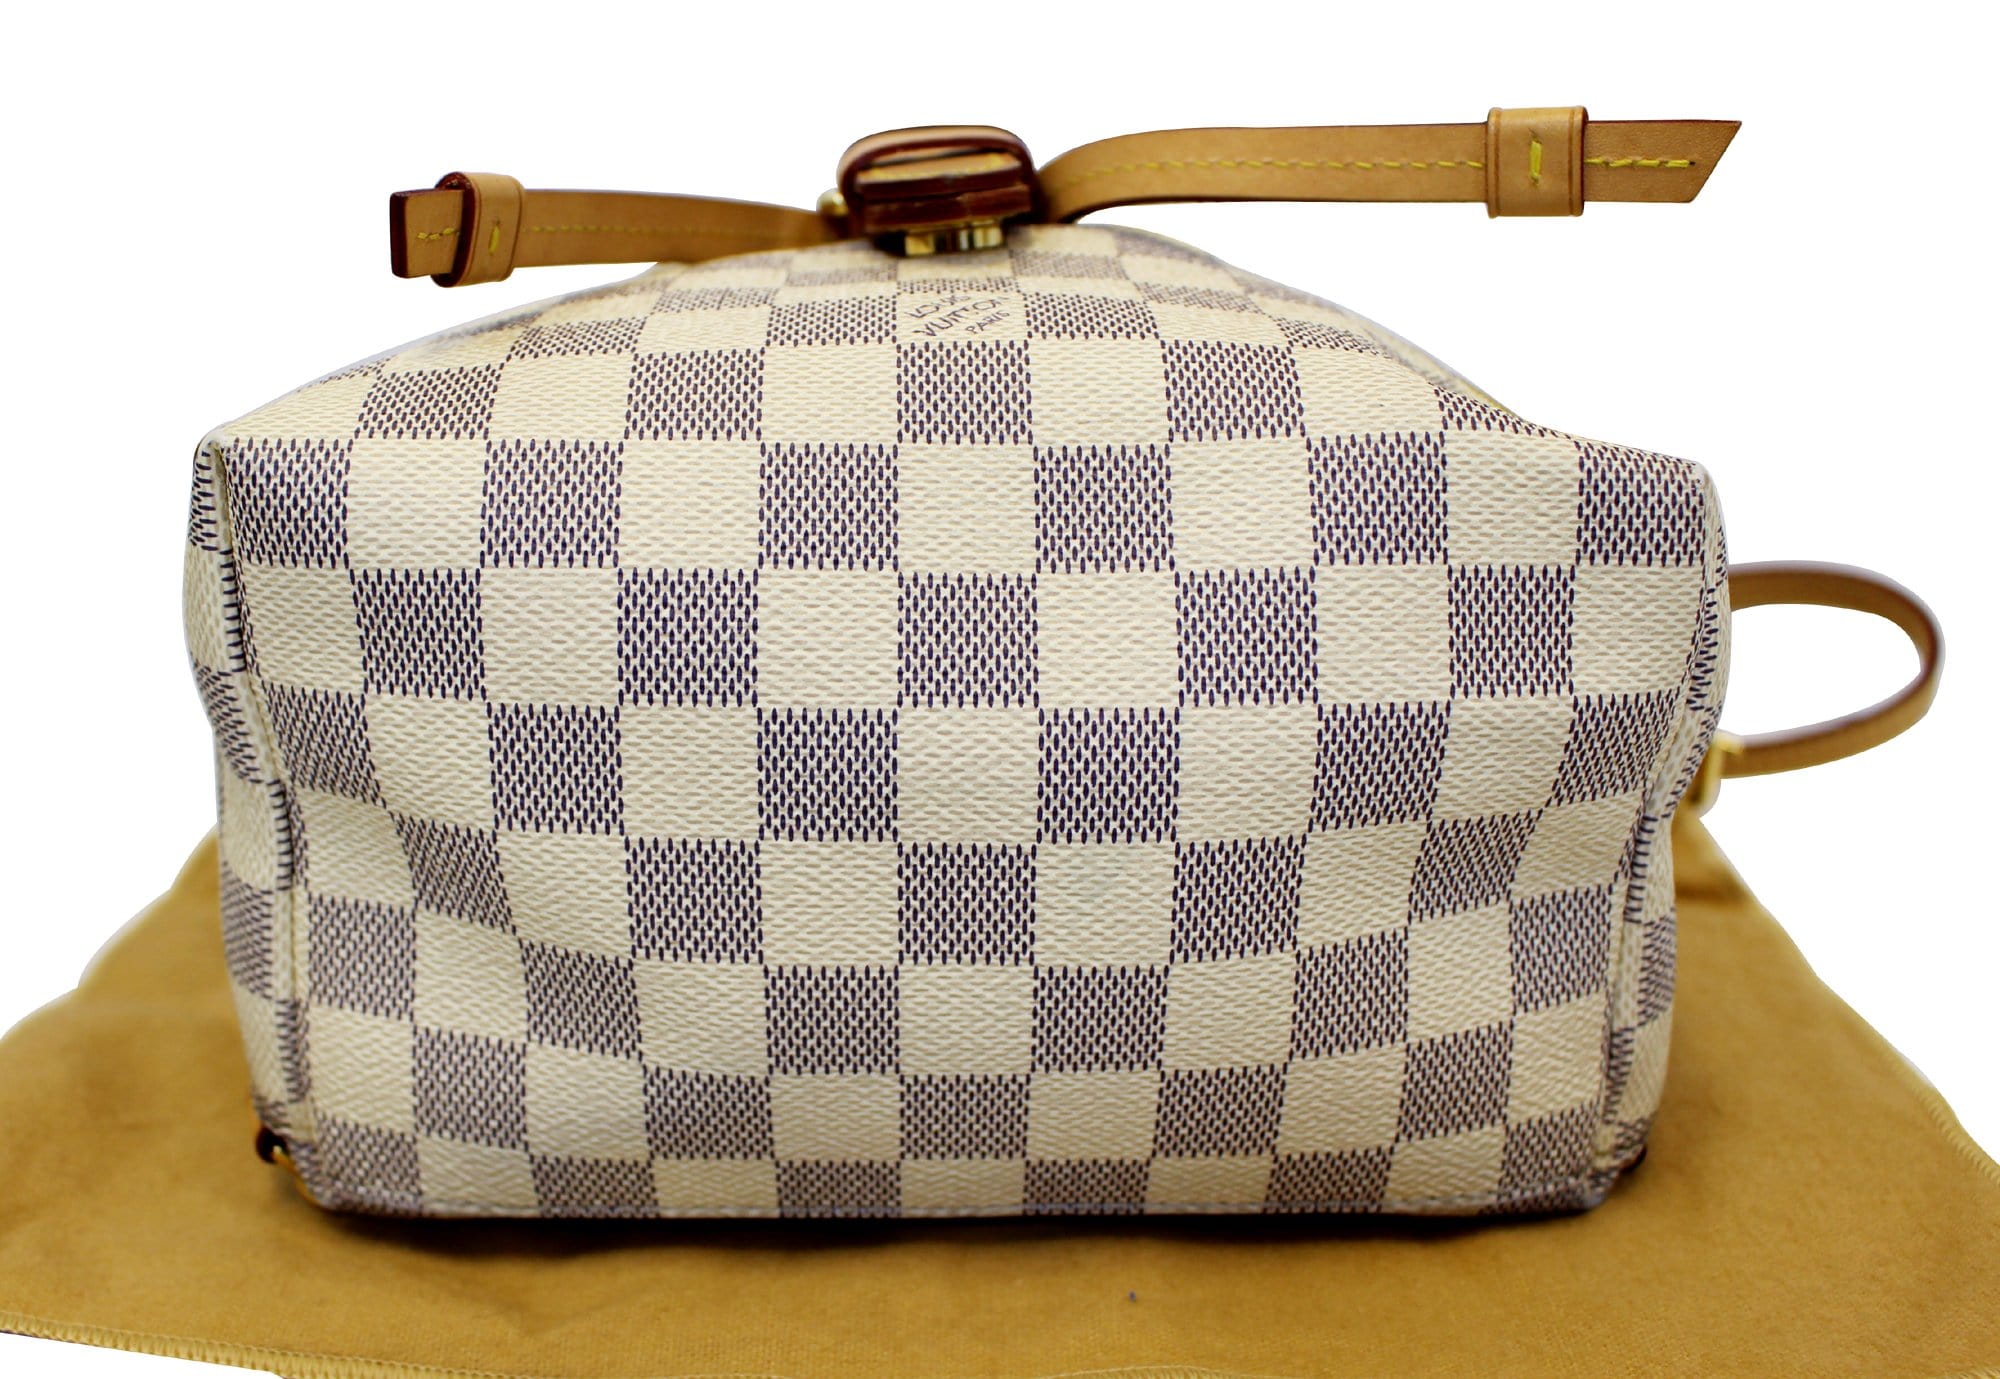 Sold at Auction: Louis Vuitton, Louis Vuitton - Damier Azur Sperone Backpack  - Cream / Blue Top Handle